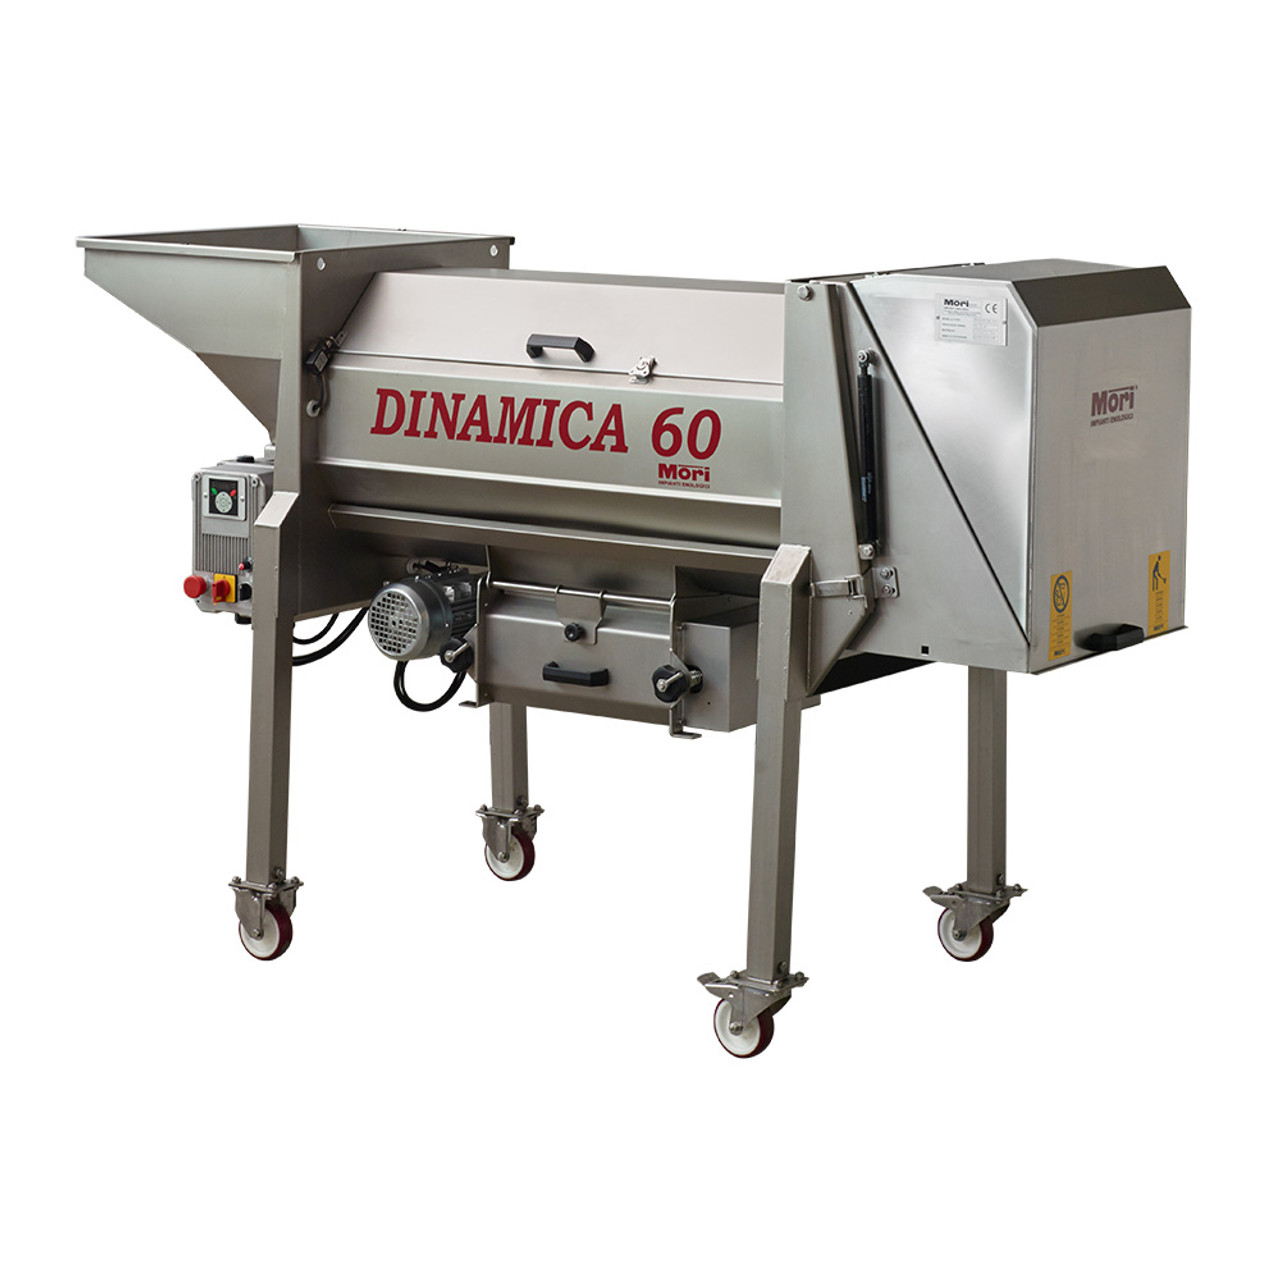 Dinamica D60 destemmercrusher with rulli crushing unit.